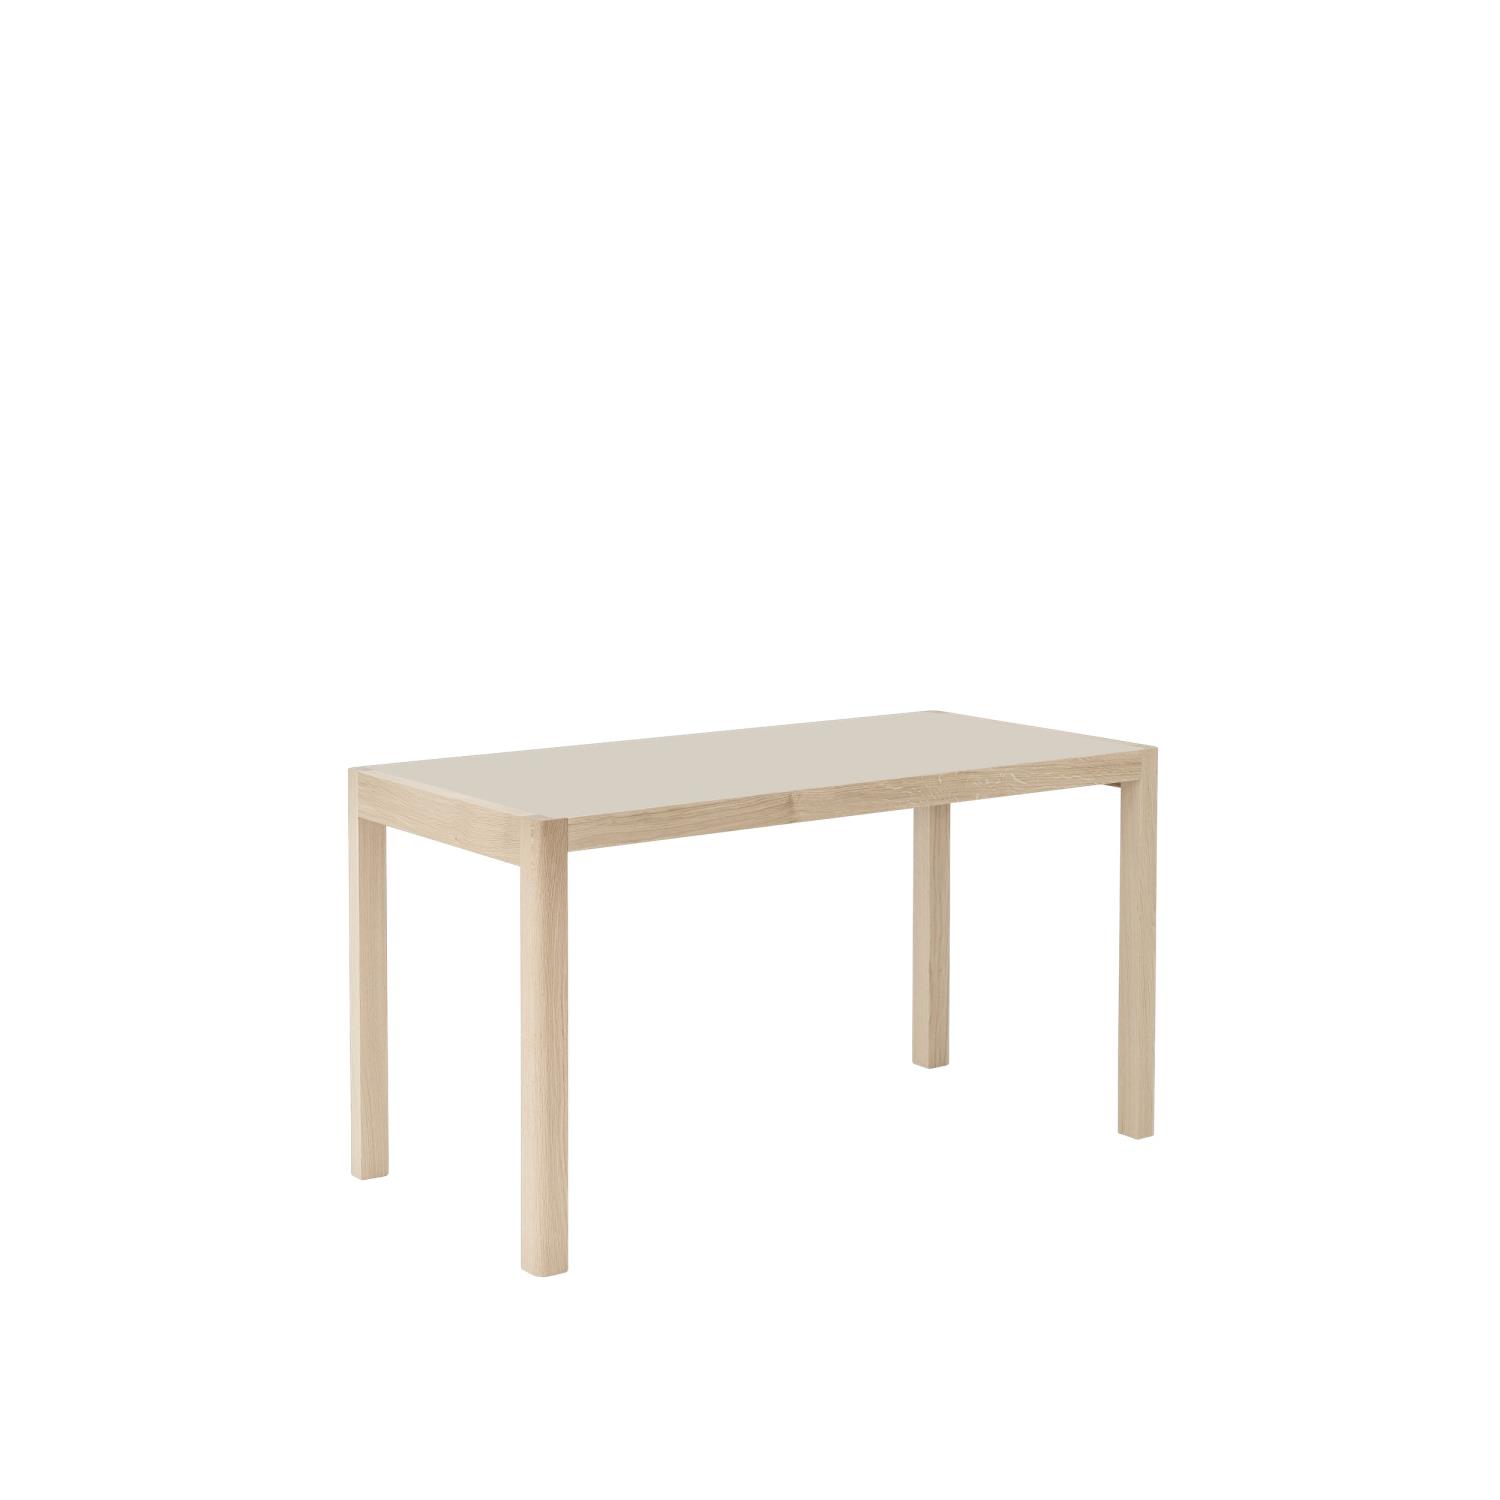 Muuto - Workshop Table - 130x65 - Warm Grey Linoleum and Oak